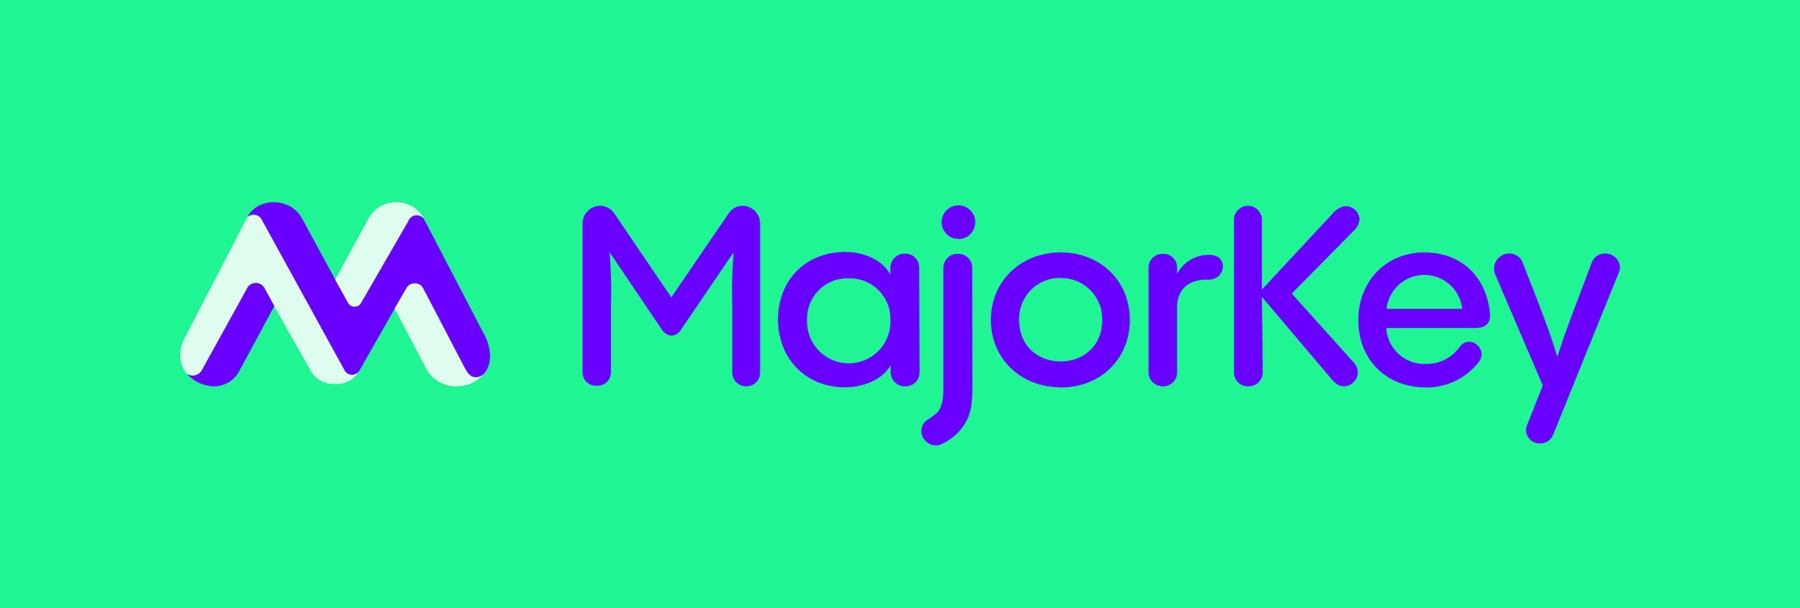 majorkey_logo.png